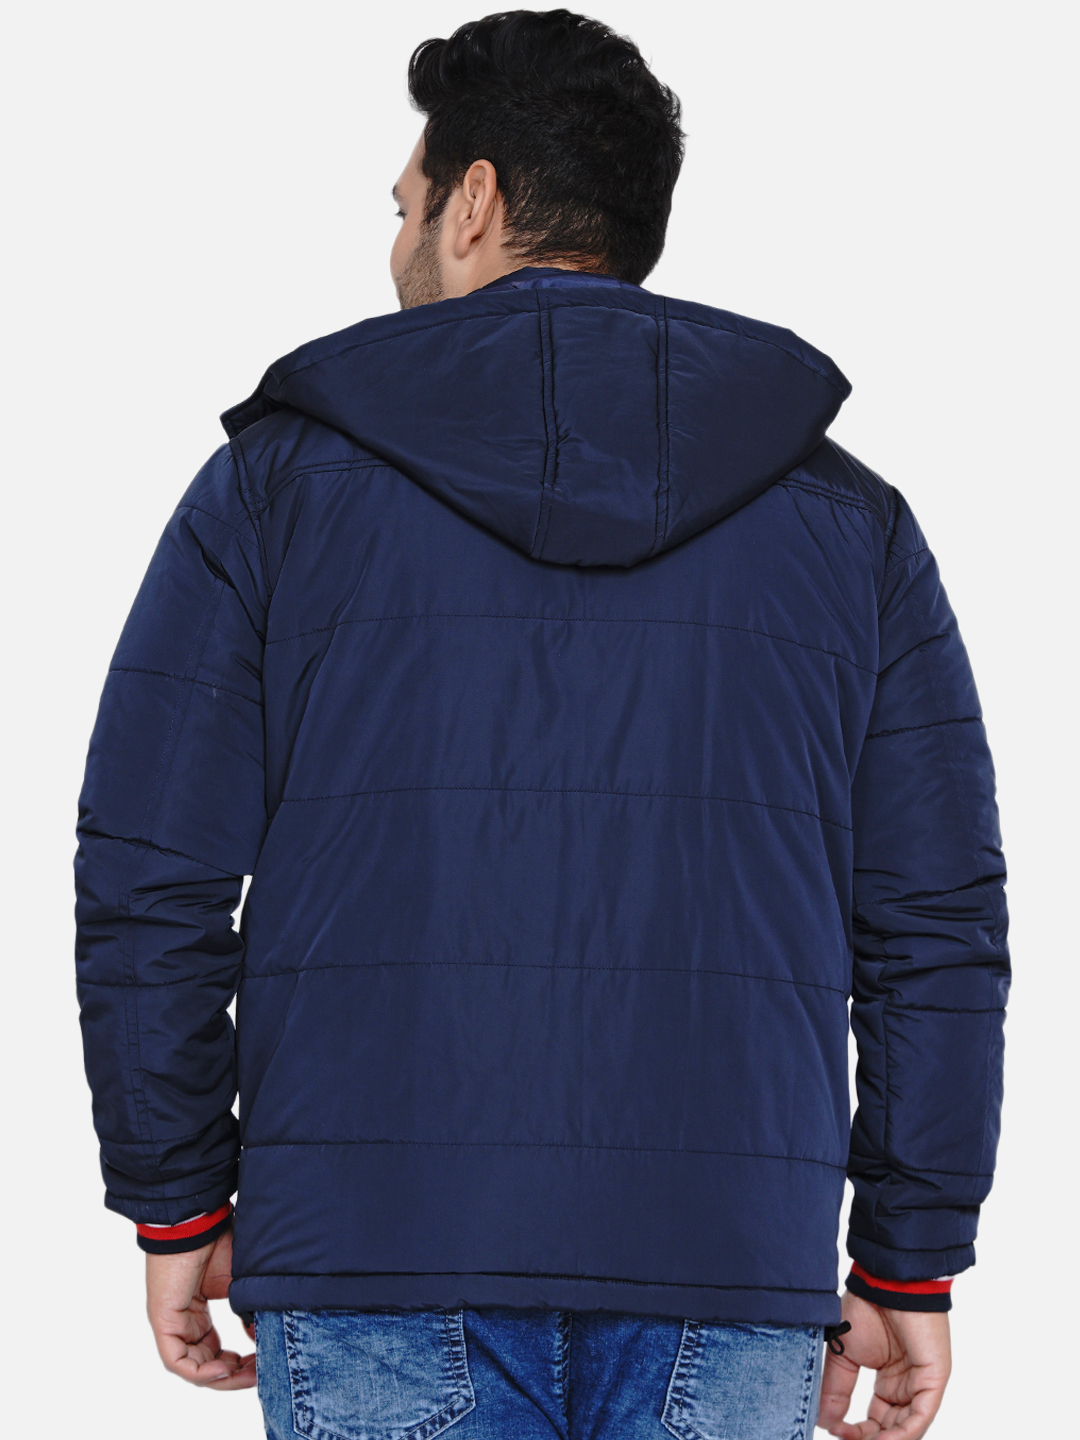 winterwear/jackets/JPJKT73004/jpjkt73004-3.jpg